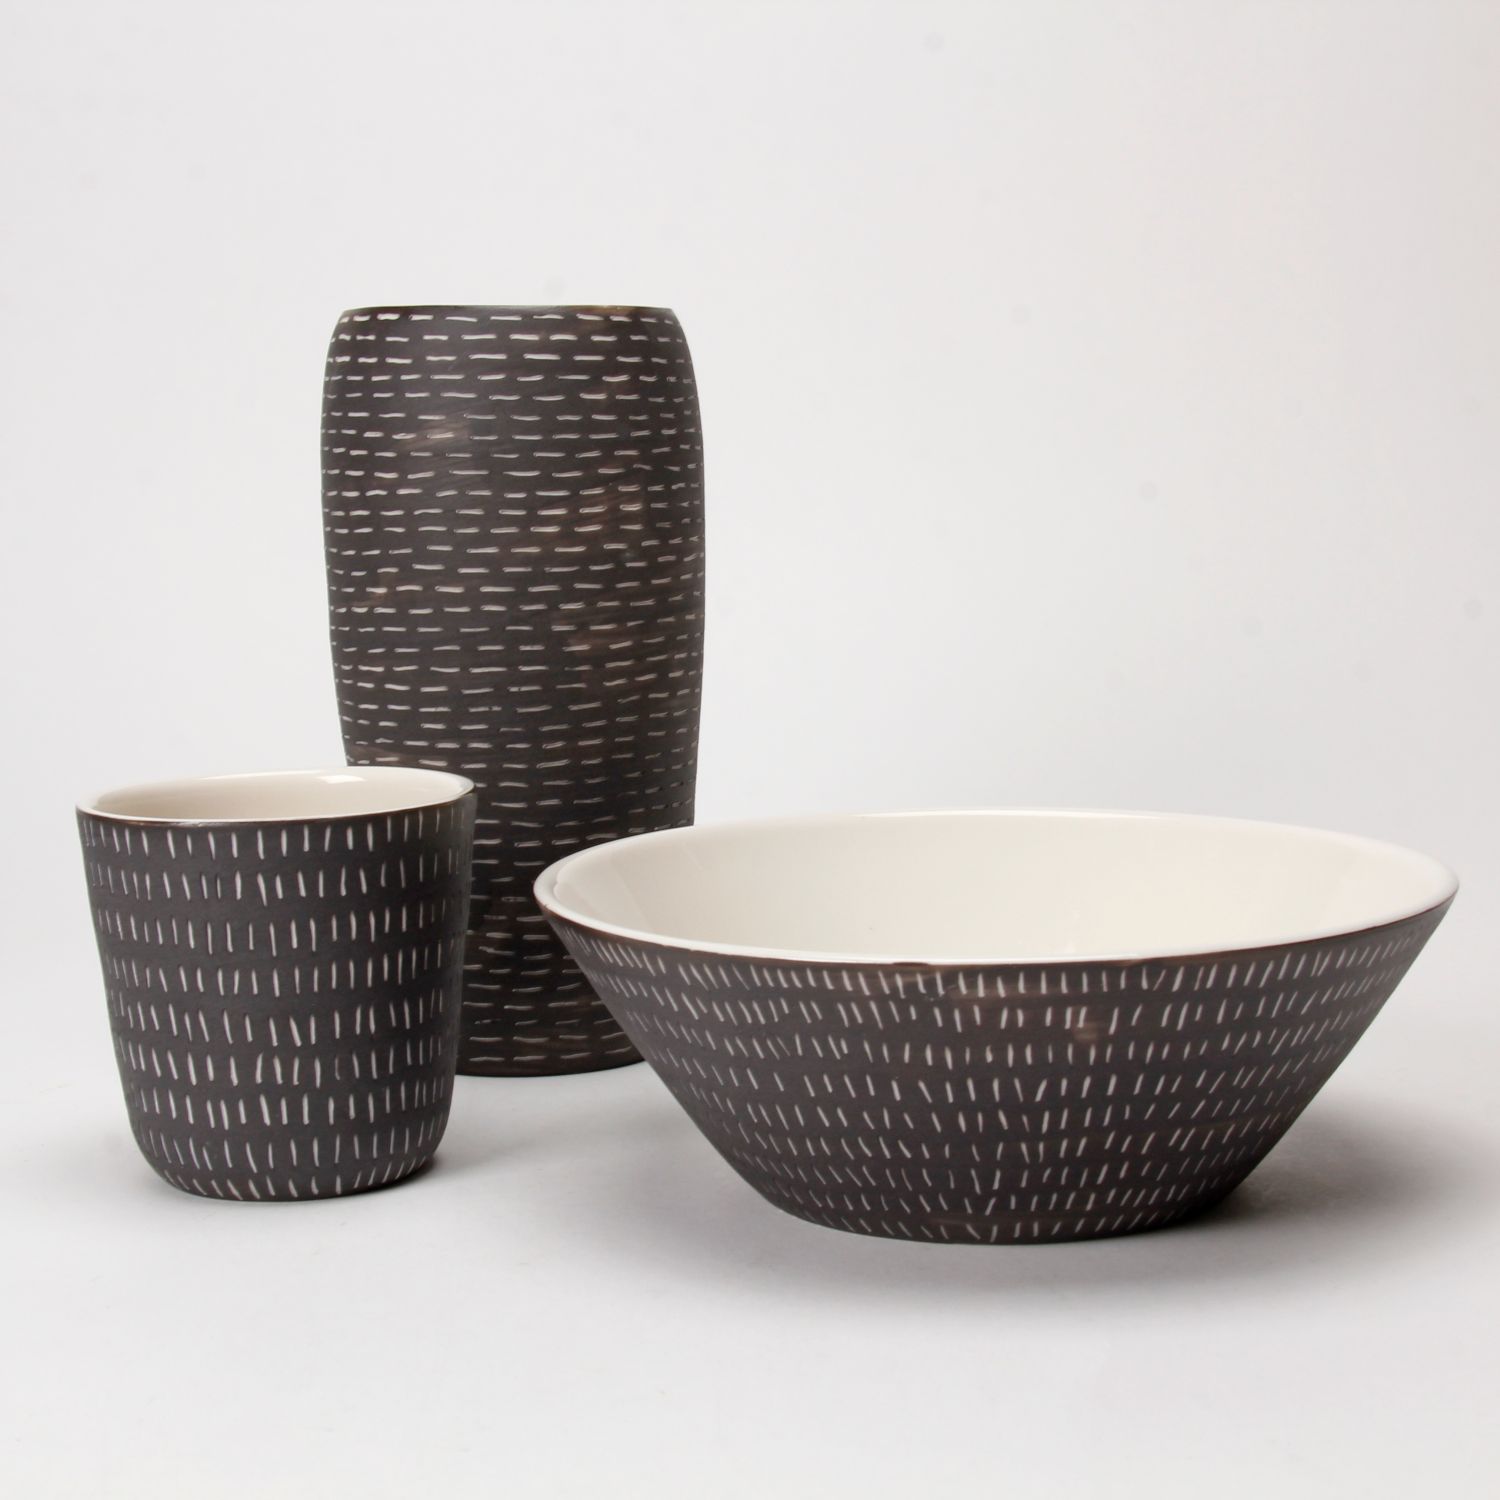 Cuir Ceramics: Black and White Tumbler Product Image 2 of 4